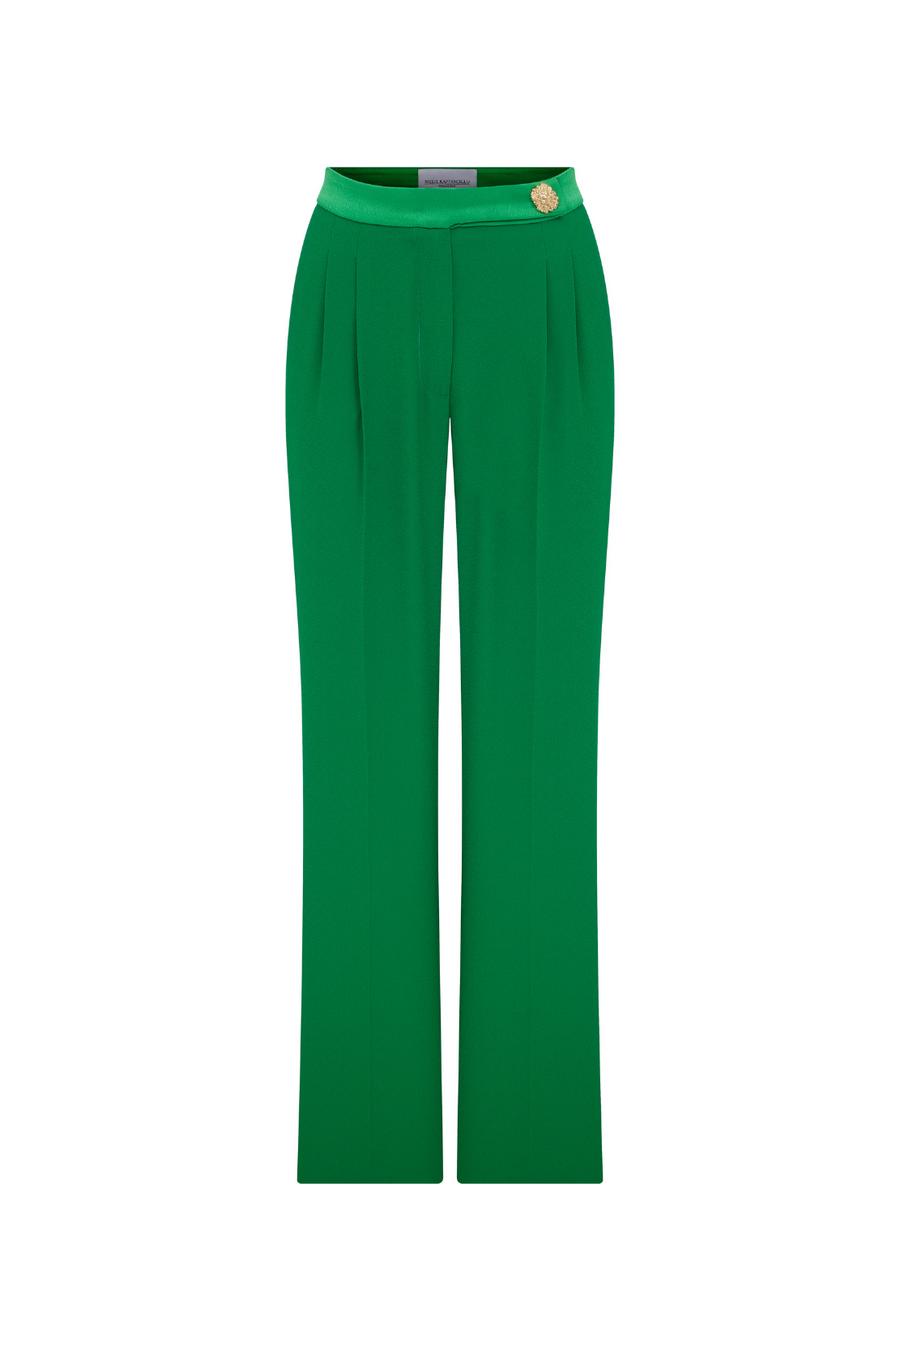 Emerald Krep Pantolon